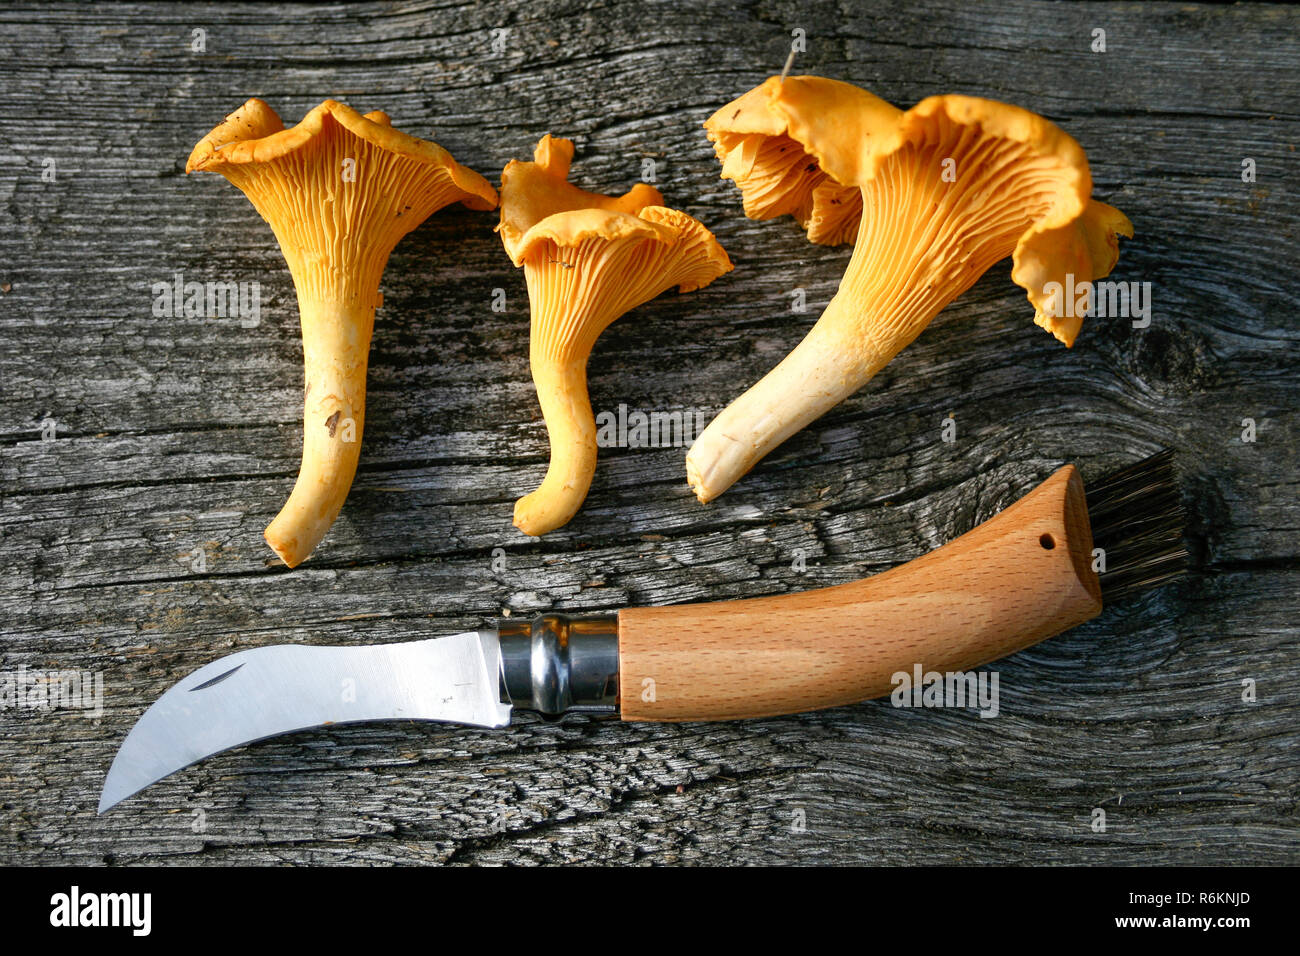 Freshly picked chanterelle mushrooms Stock Photo